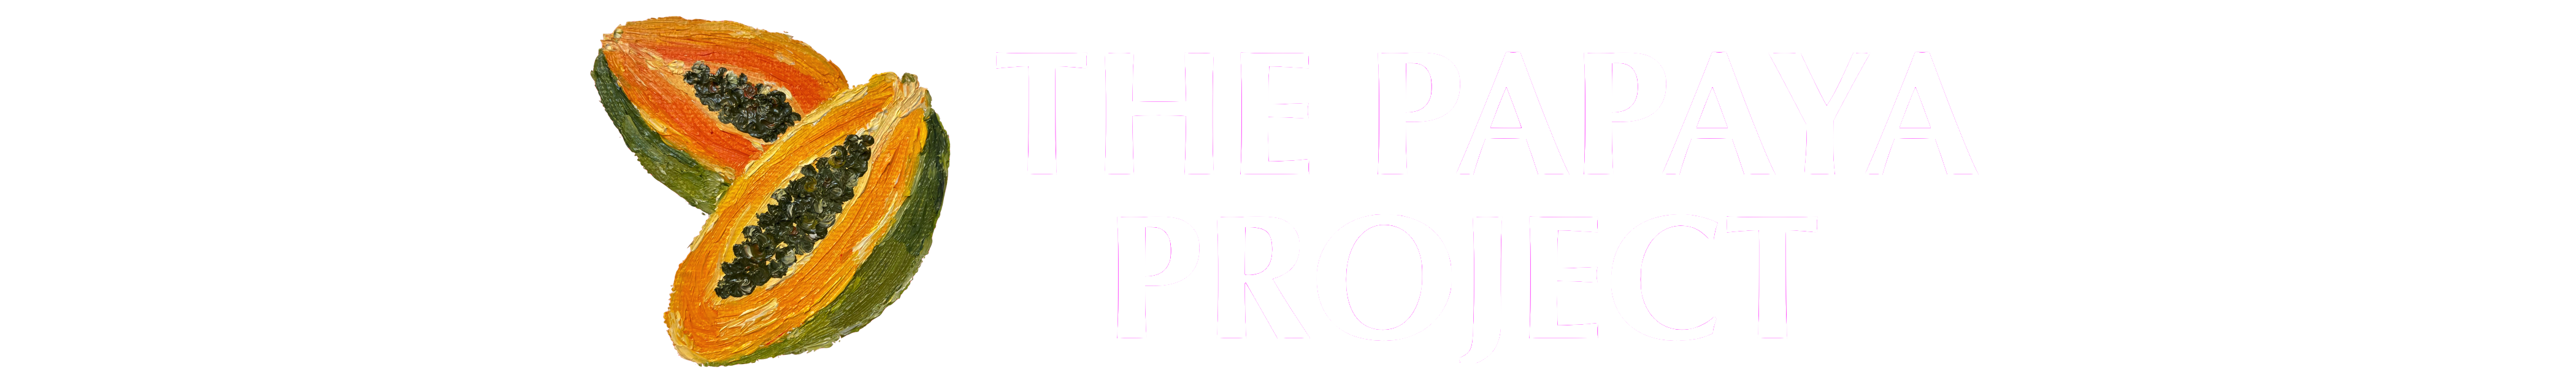 The Papaya Project